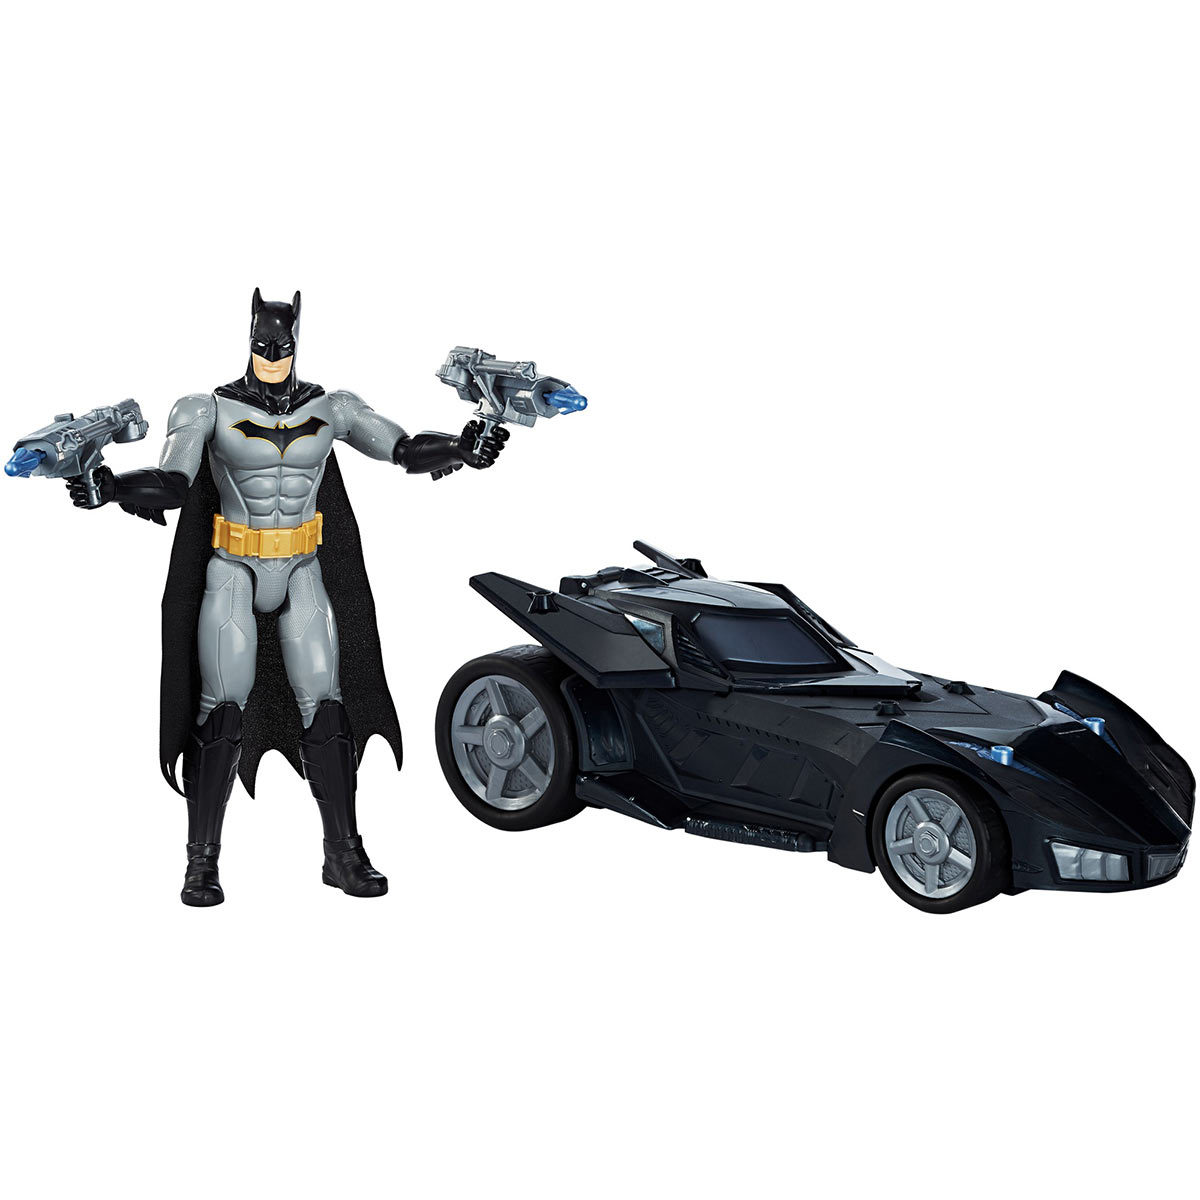 Batmobile and matman figure on white background